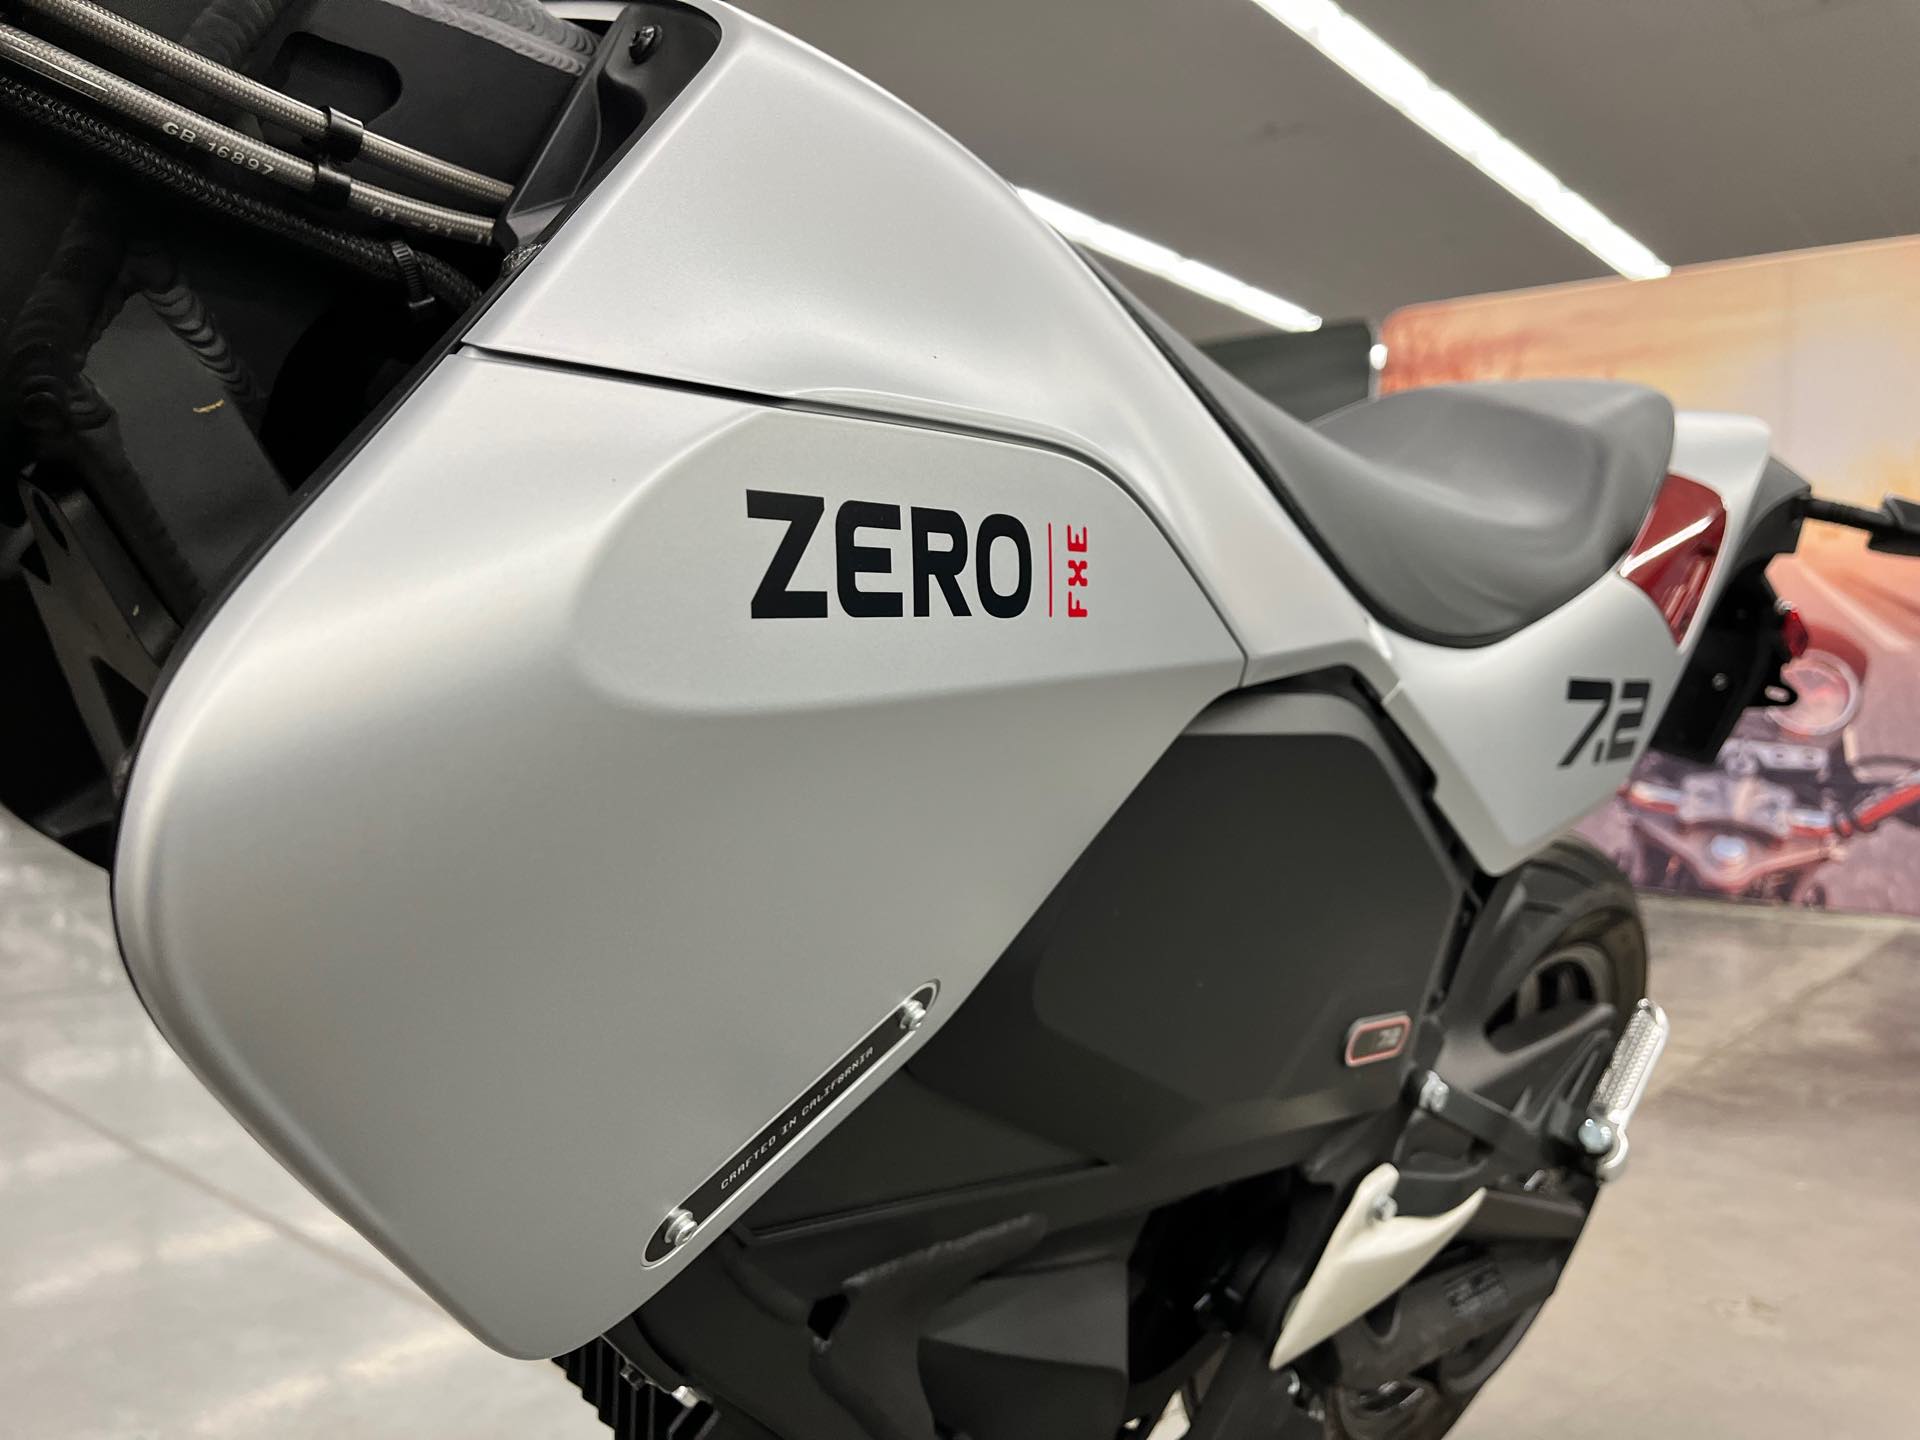 2022 Zero FXE ZF72 at Aces Motorcycles - Denver